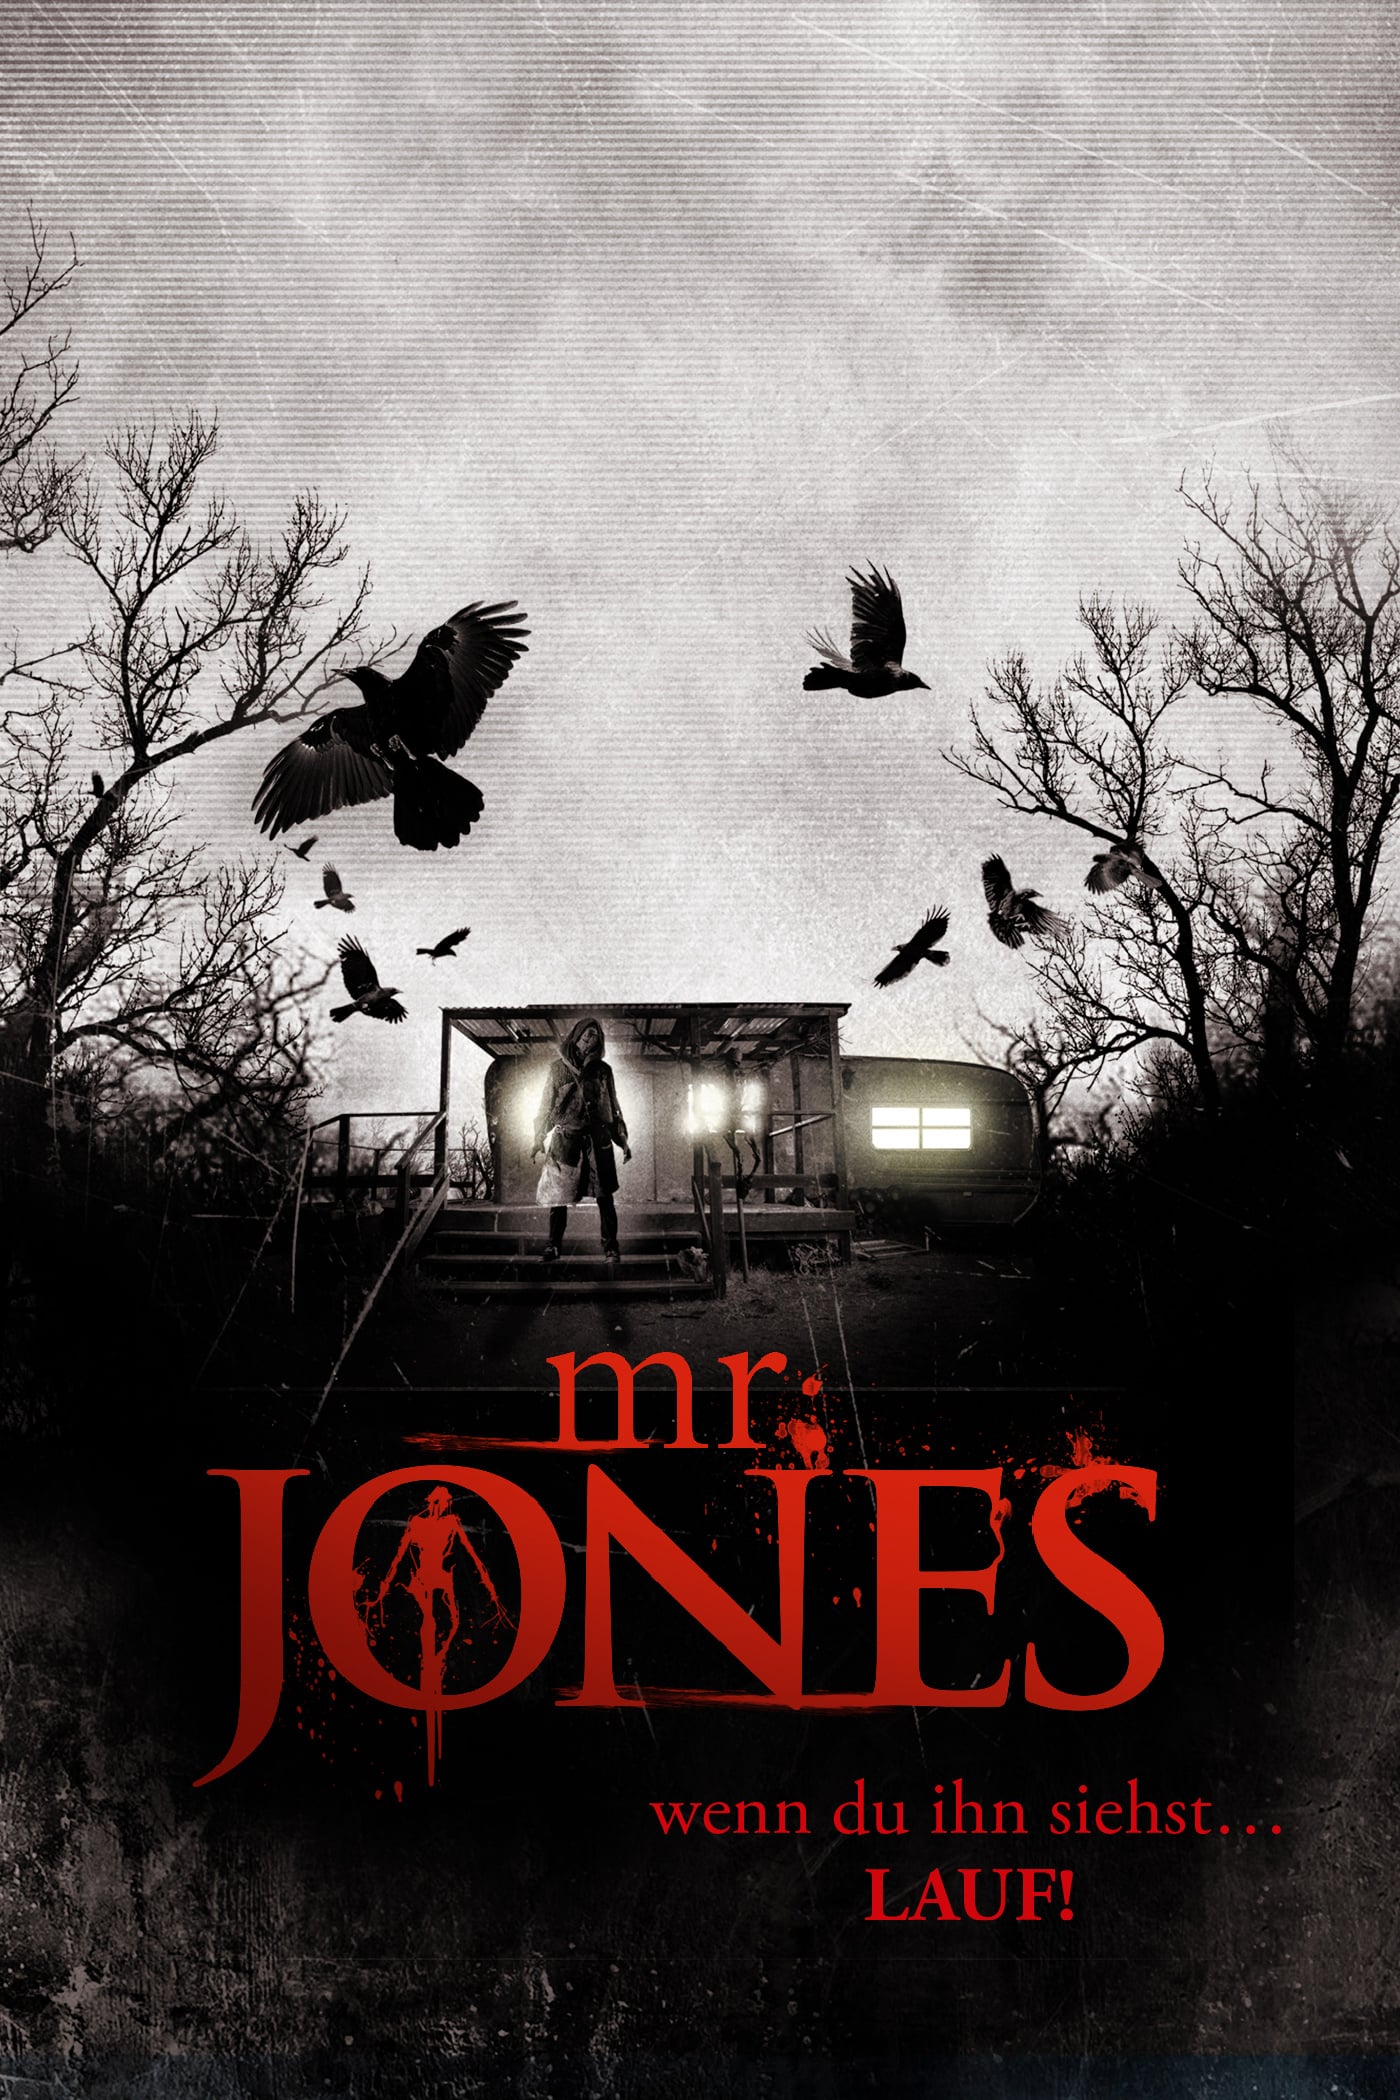 Plakat von "Mr. Jones"